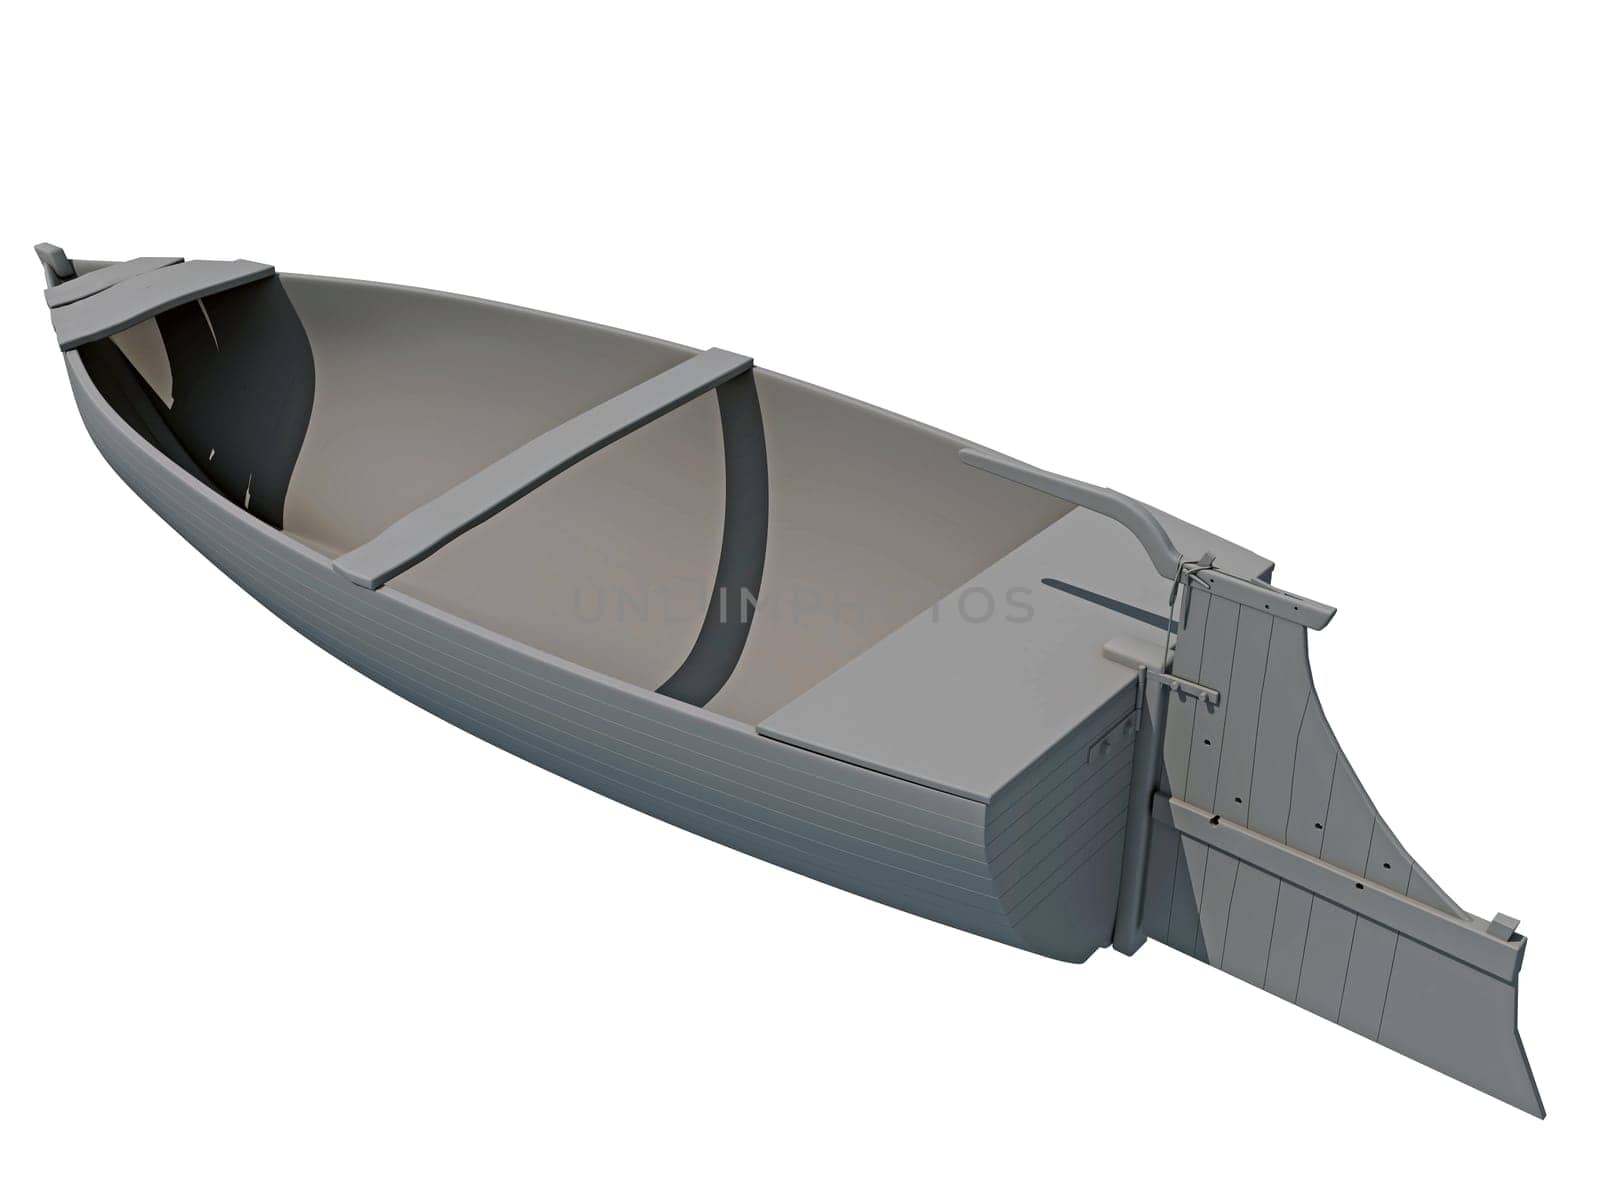 River Boat 3D rendering model on white background